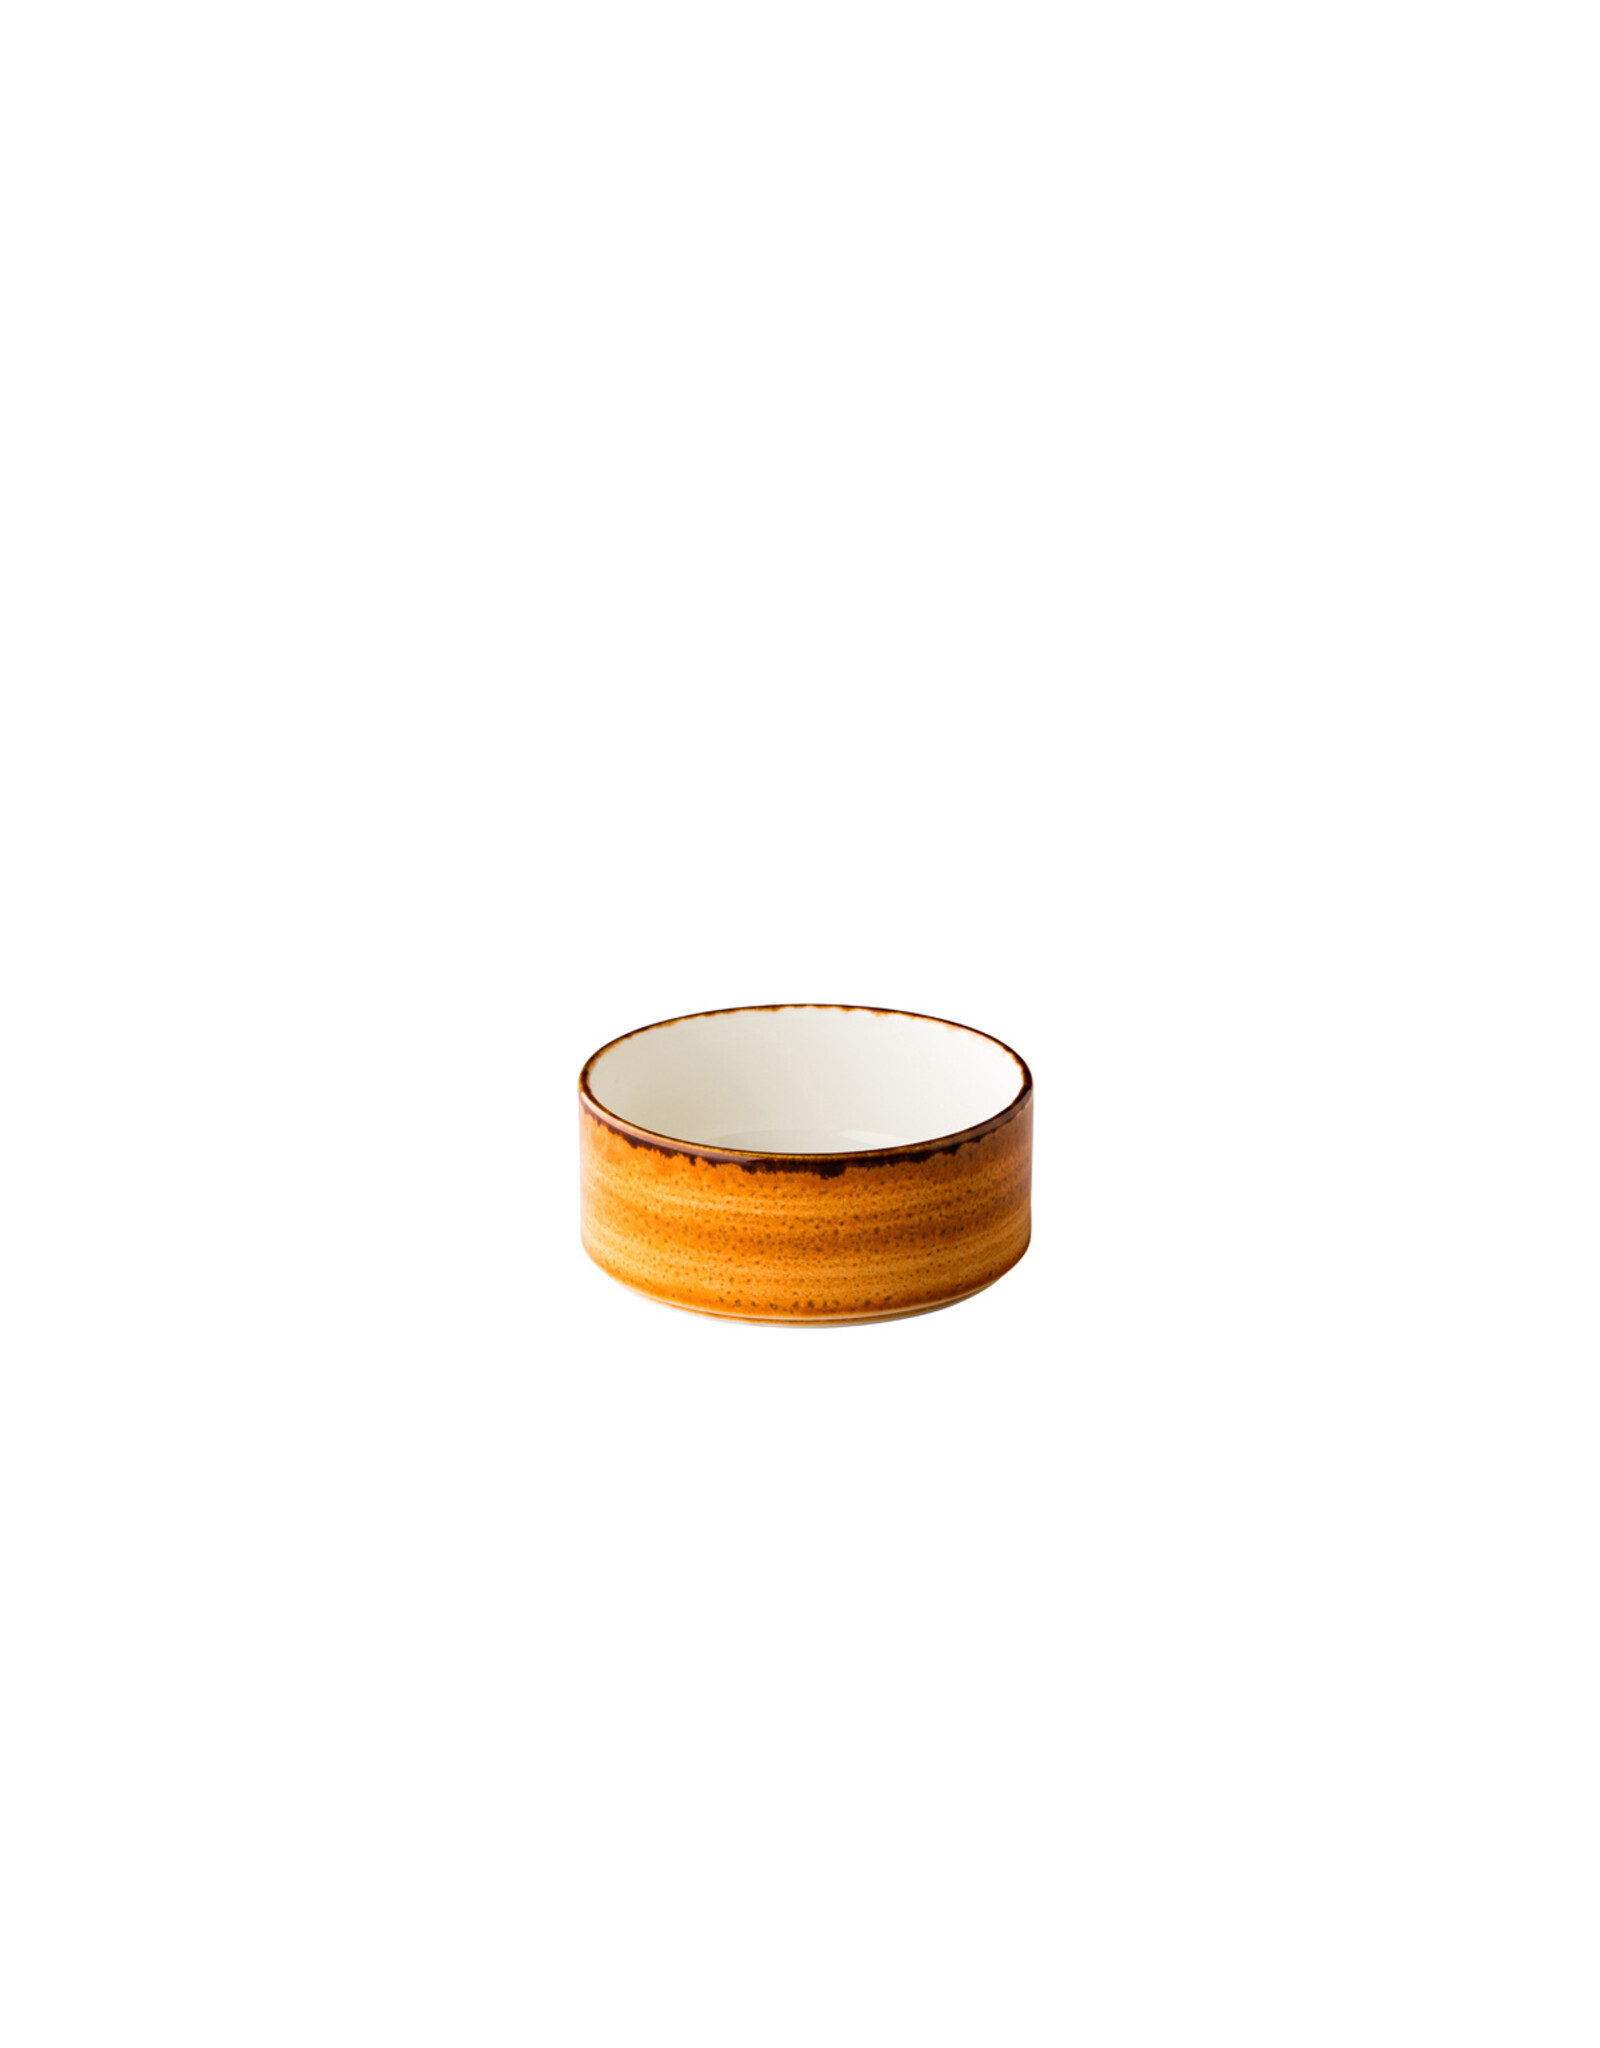 Stylepoint Jersey bowl raised edge stackable orange 12,8 cm 450ml